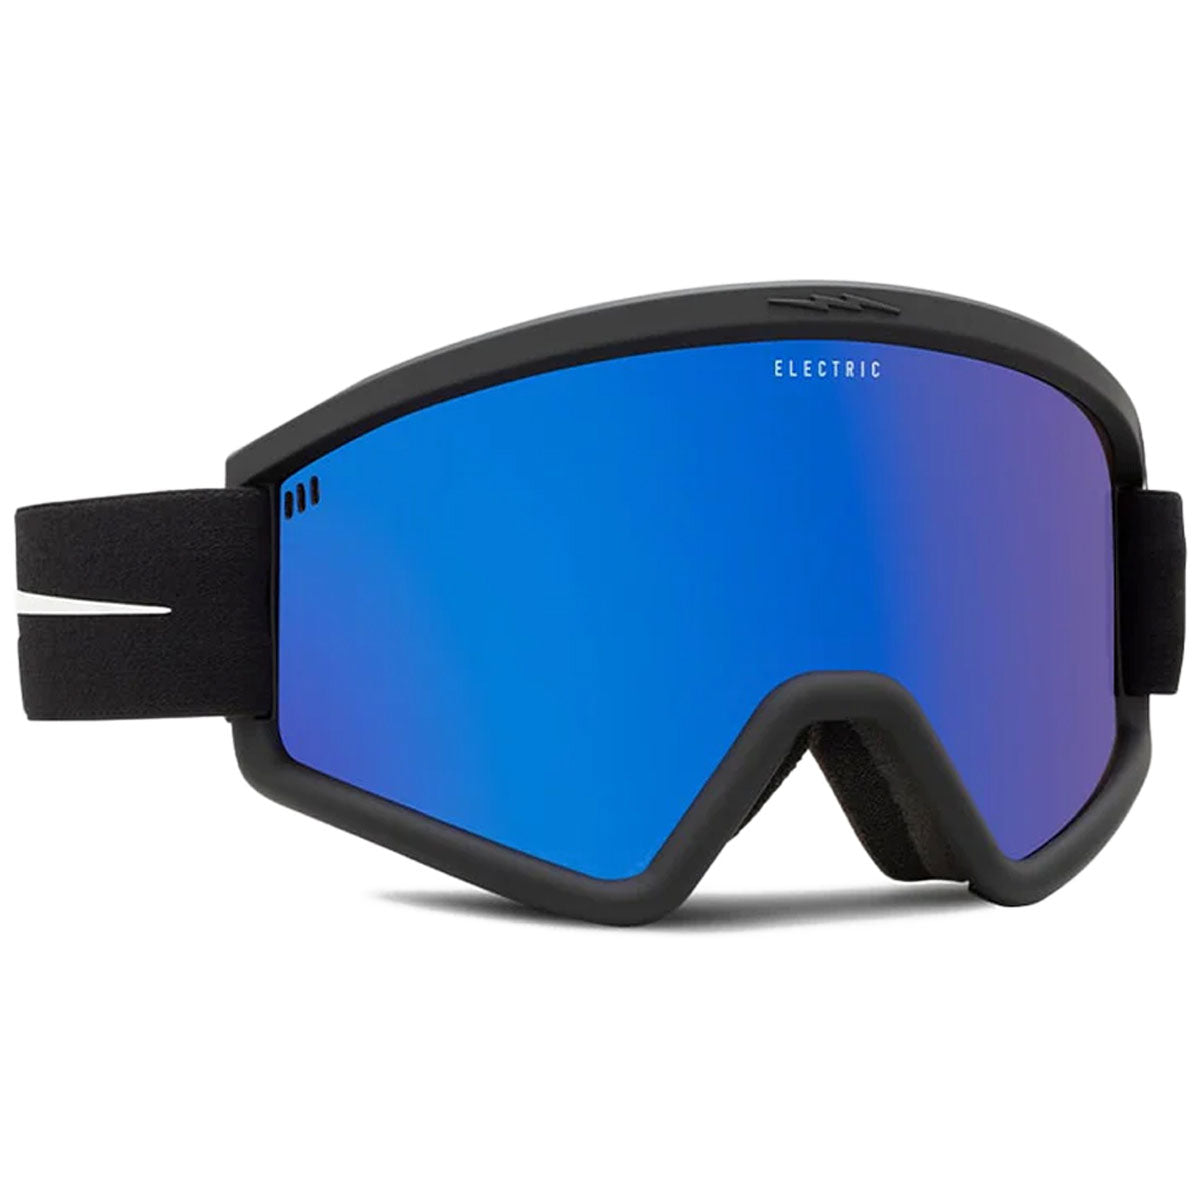 Electric Hex Snowboard Goggles - Matte Black/Blue Chrome image 1